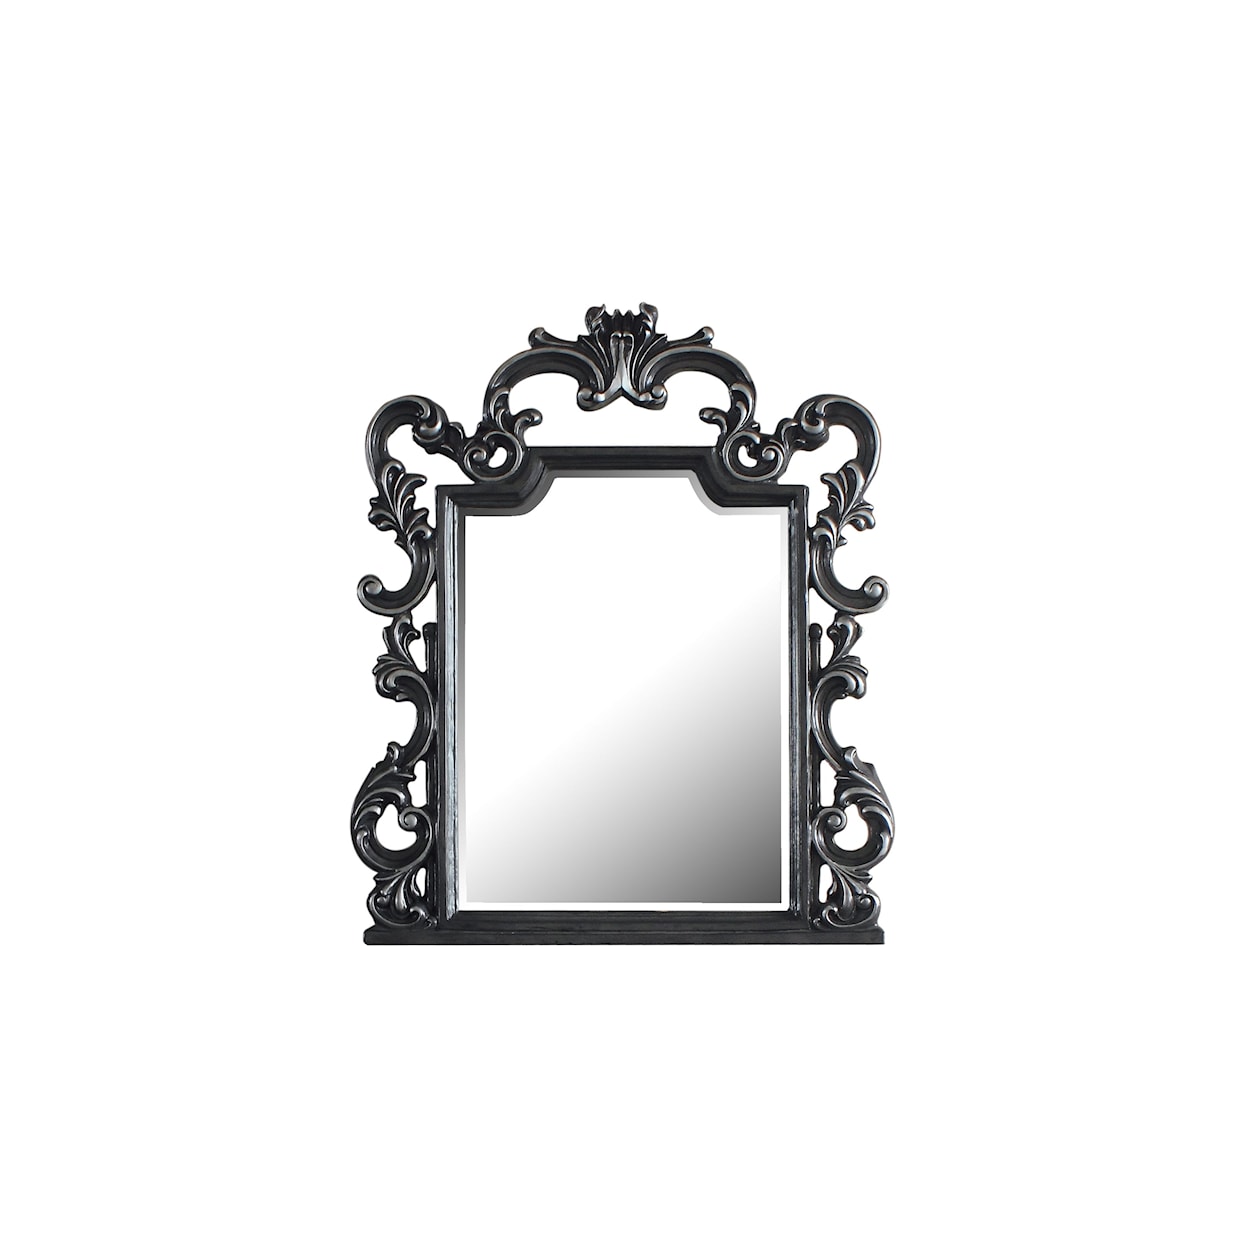 Acme Furniture House Delphine Dresser Mirror